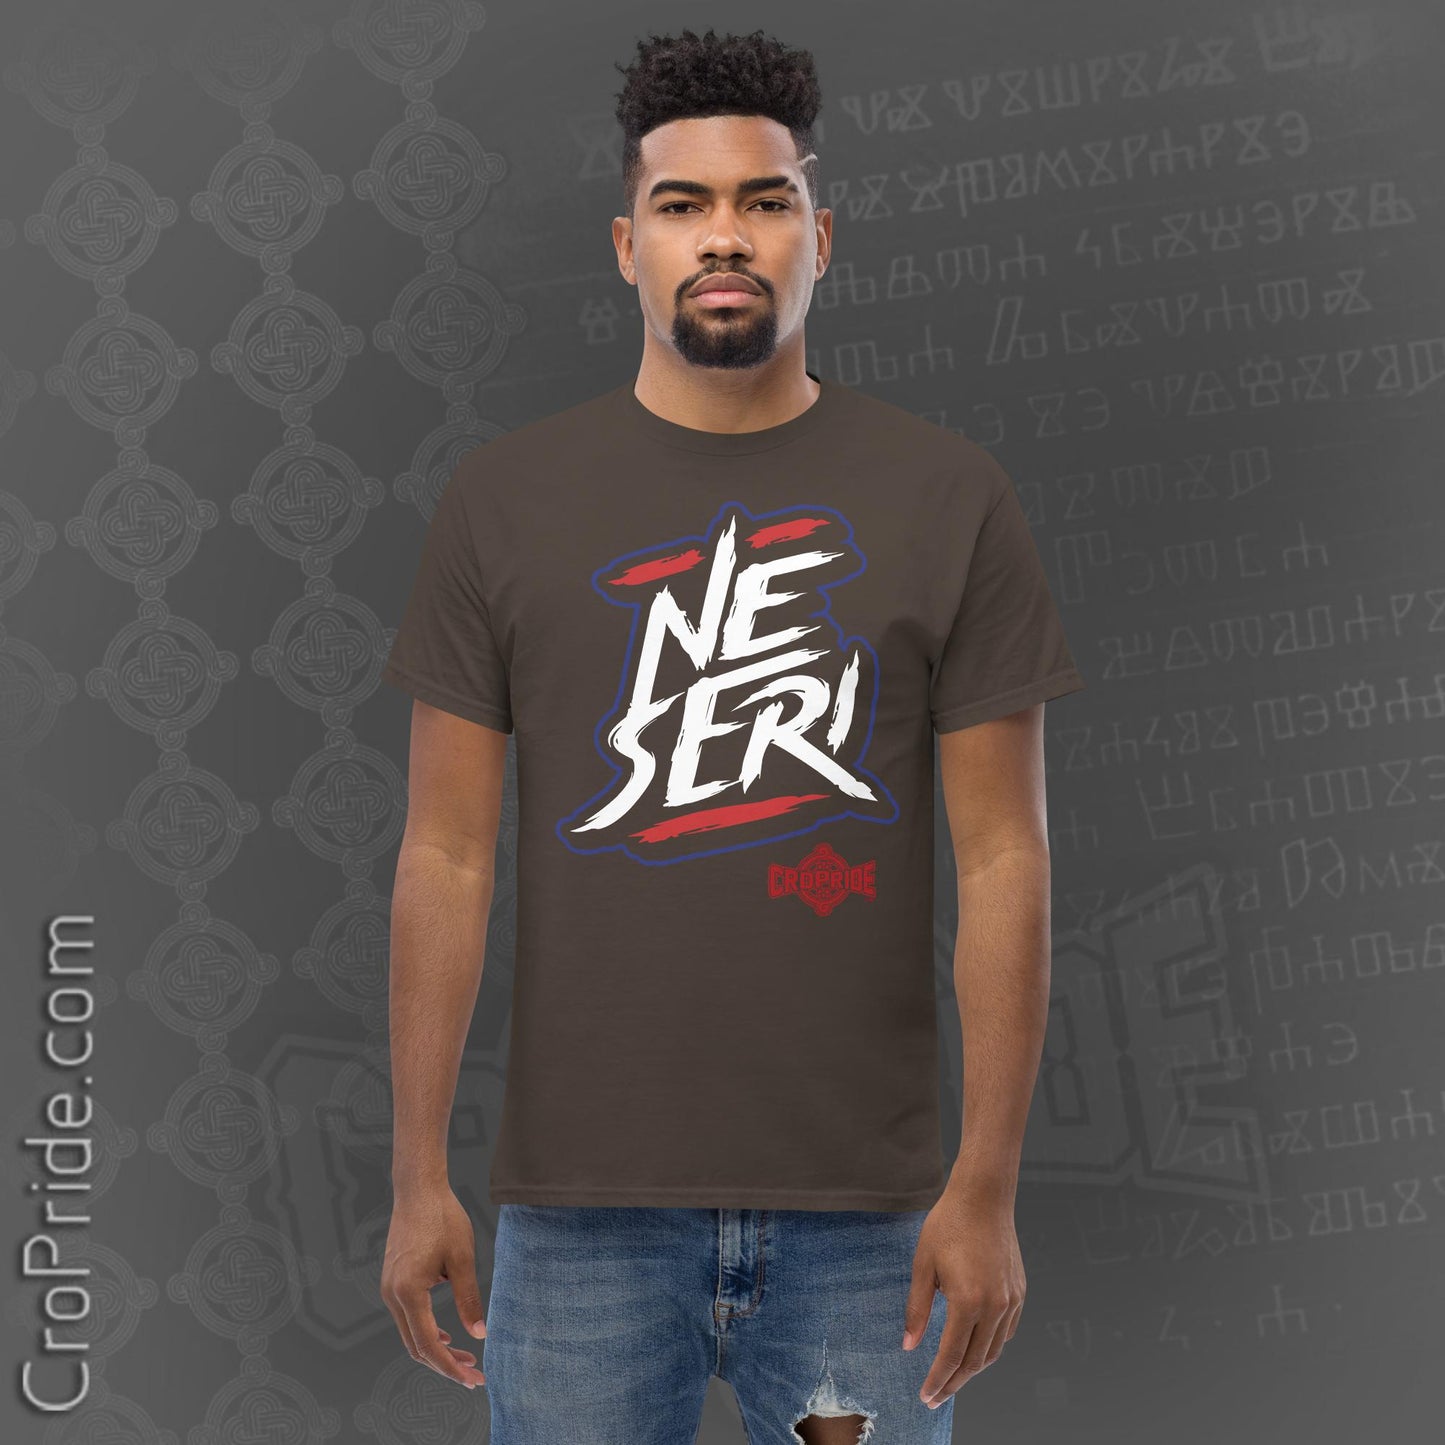 Croatian T-Shirt | "NE SERI" Funny Design | 100% Cotton | Sizes S-3XL